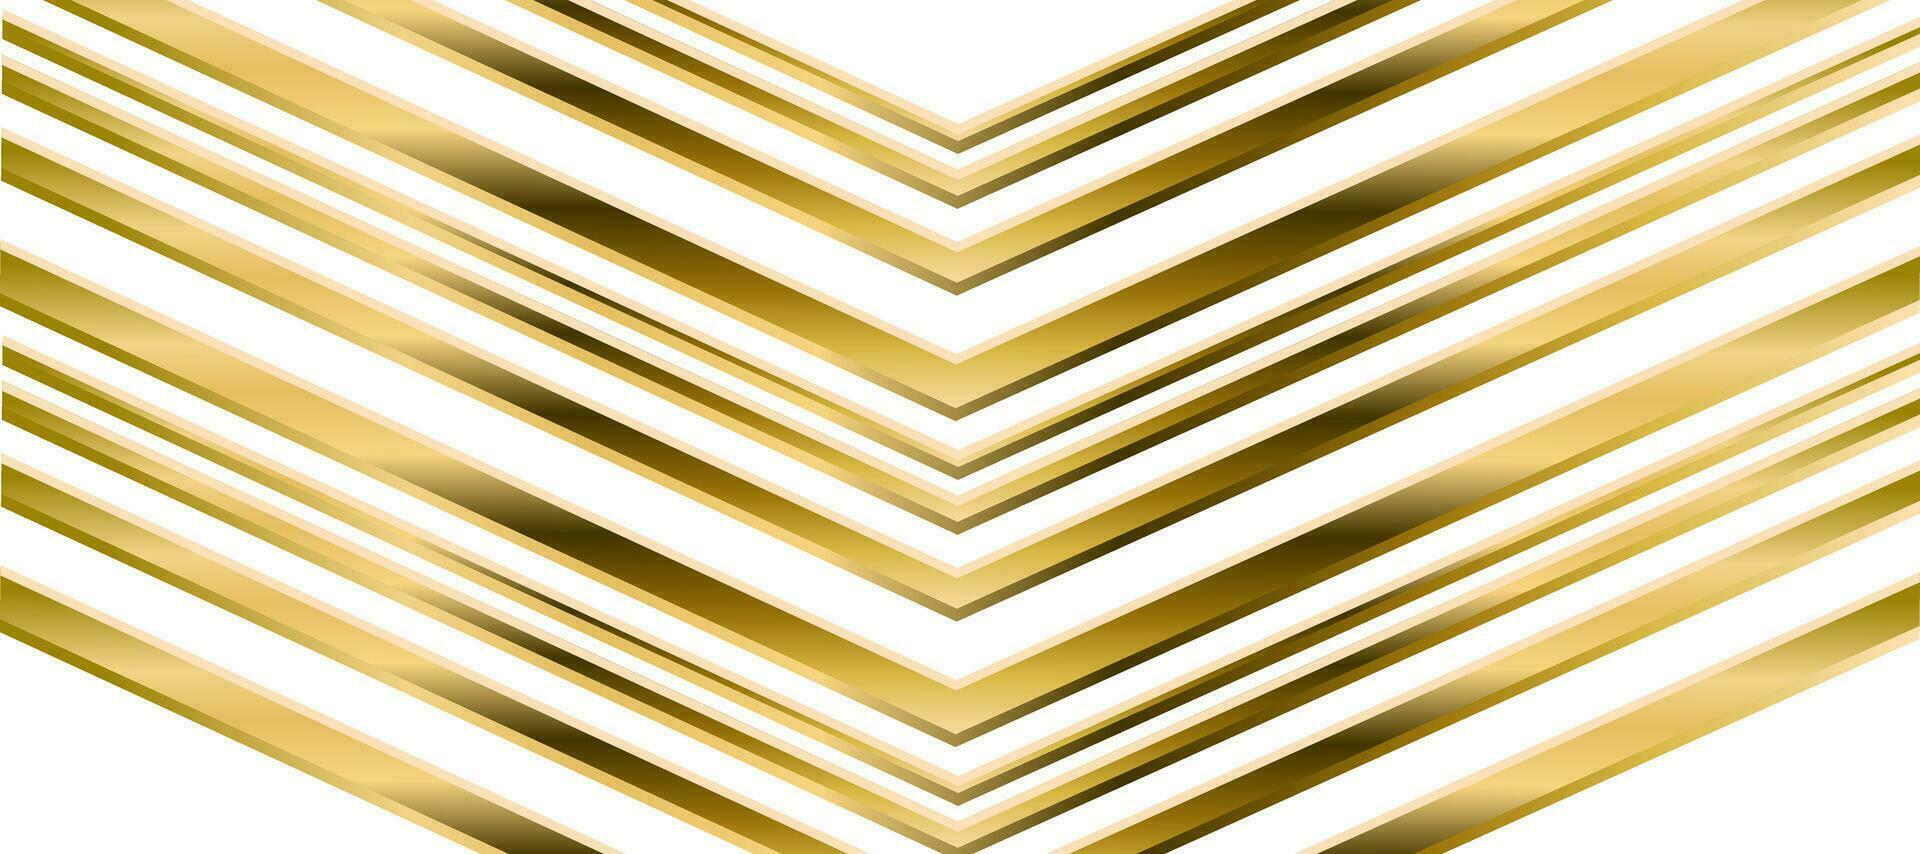 Abstract Shining Gold Chevron background Wallpaper vector